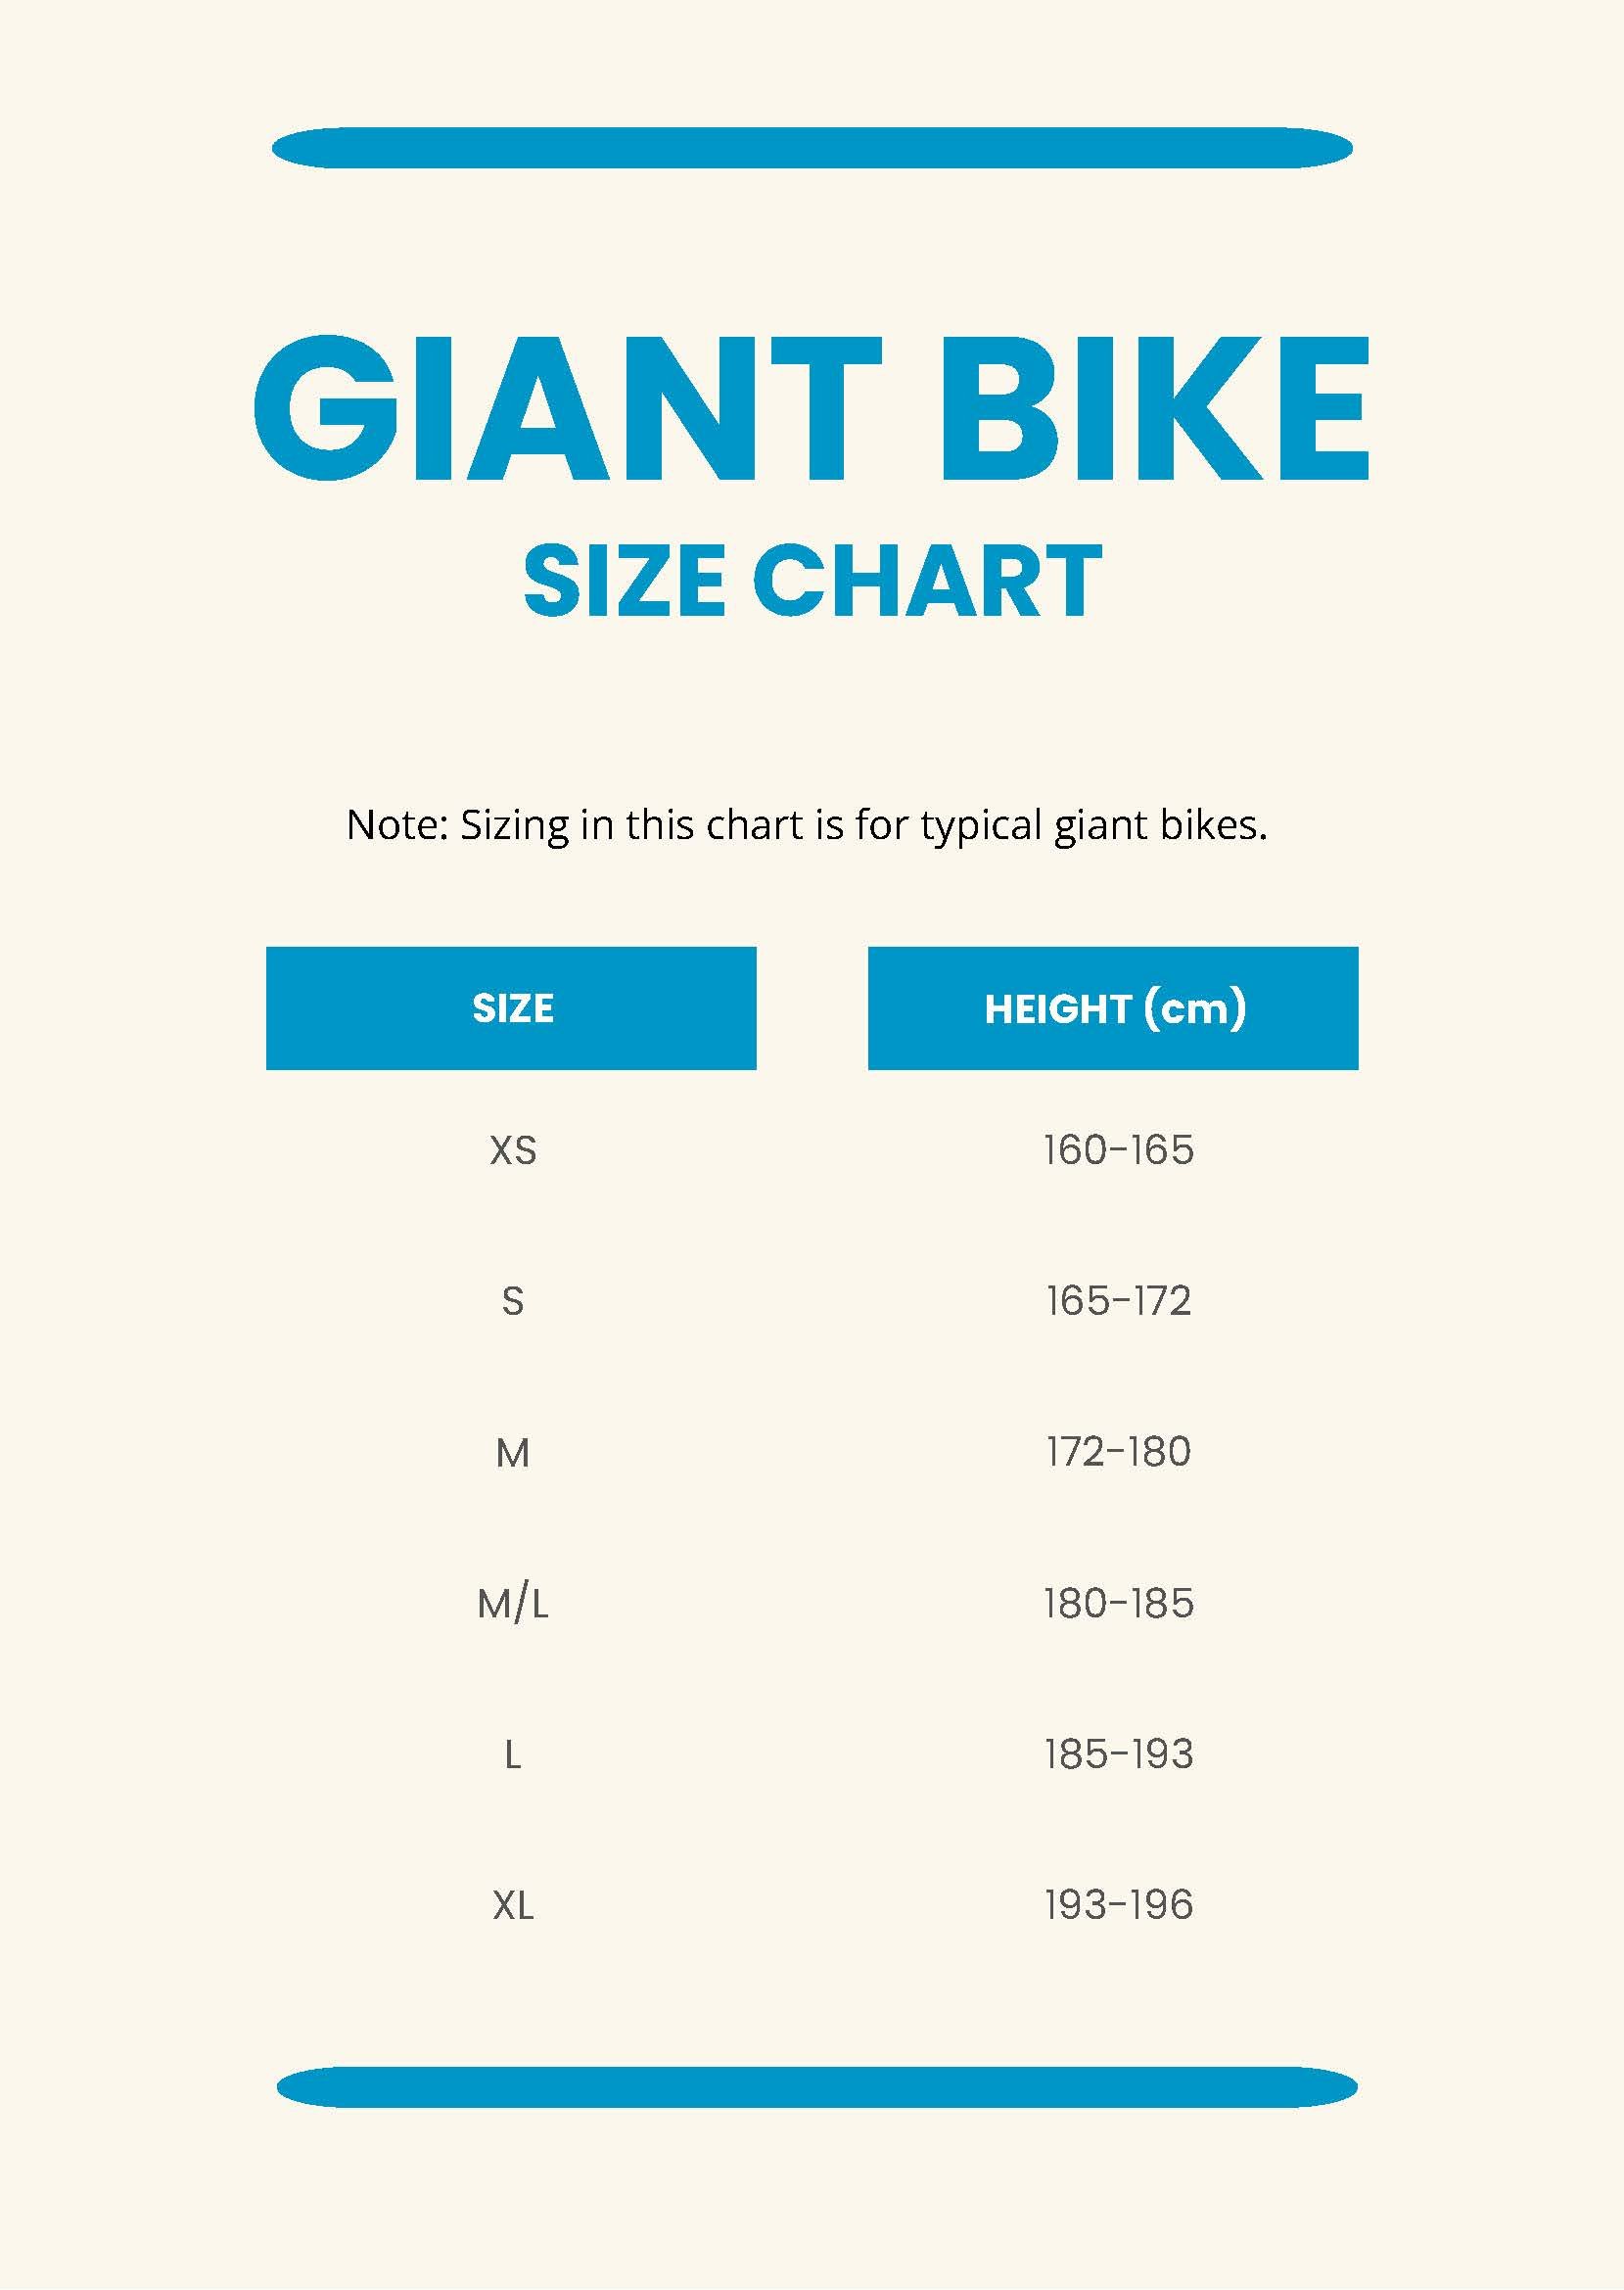 Giant Bike Size Chart in PDF - Download | Template.net